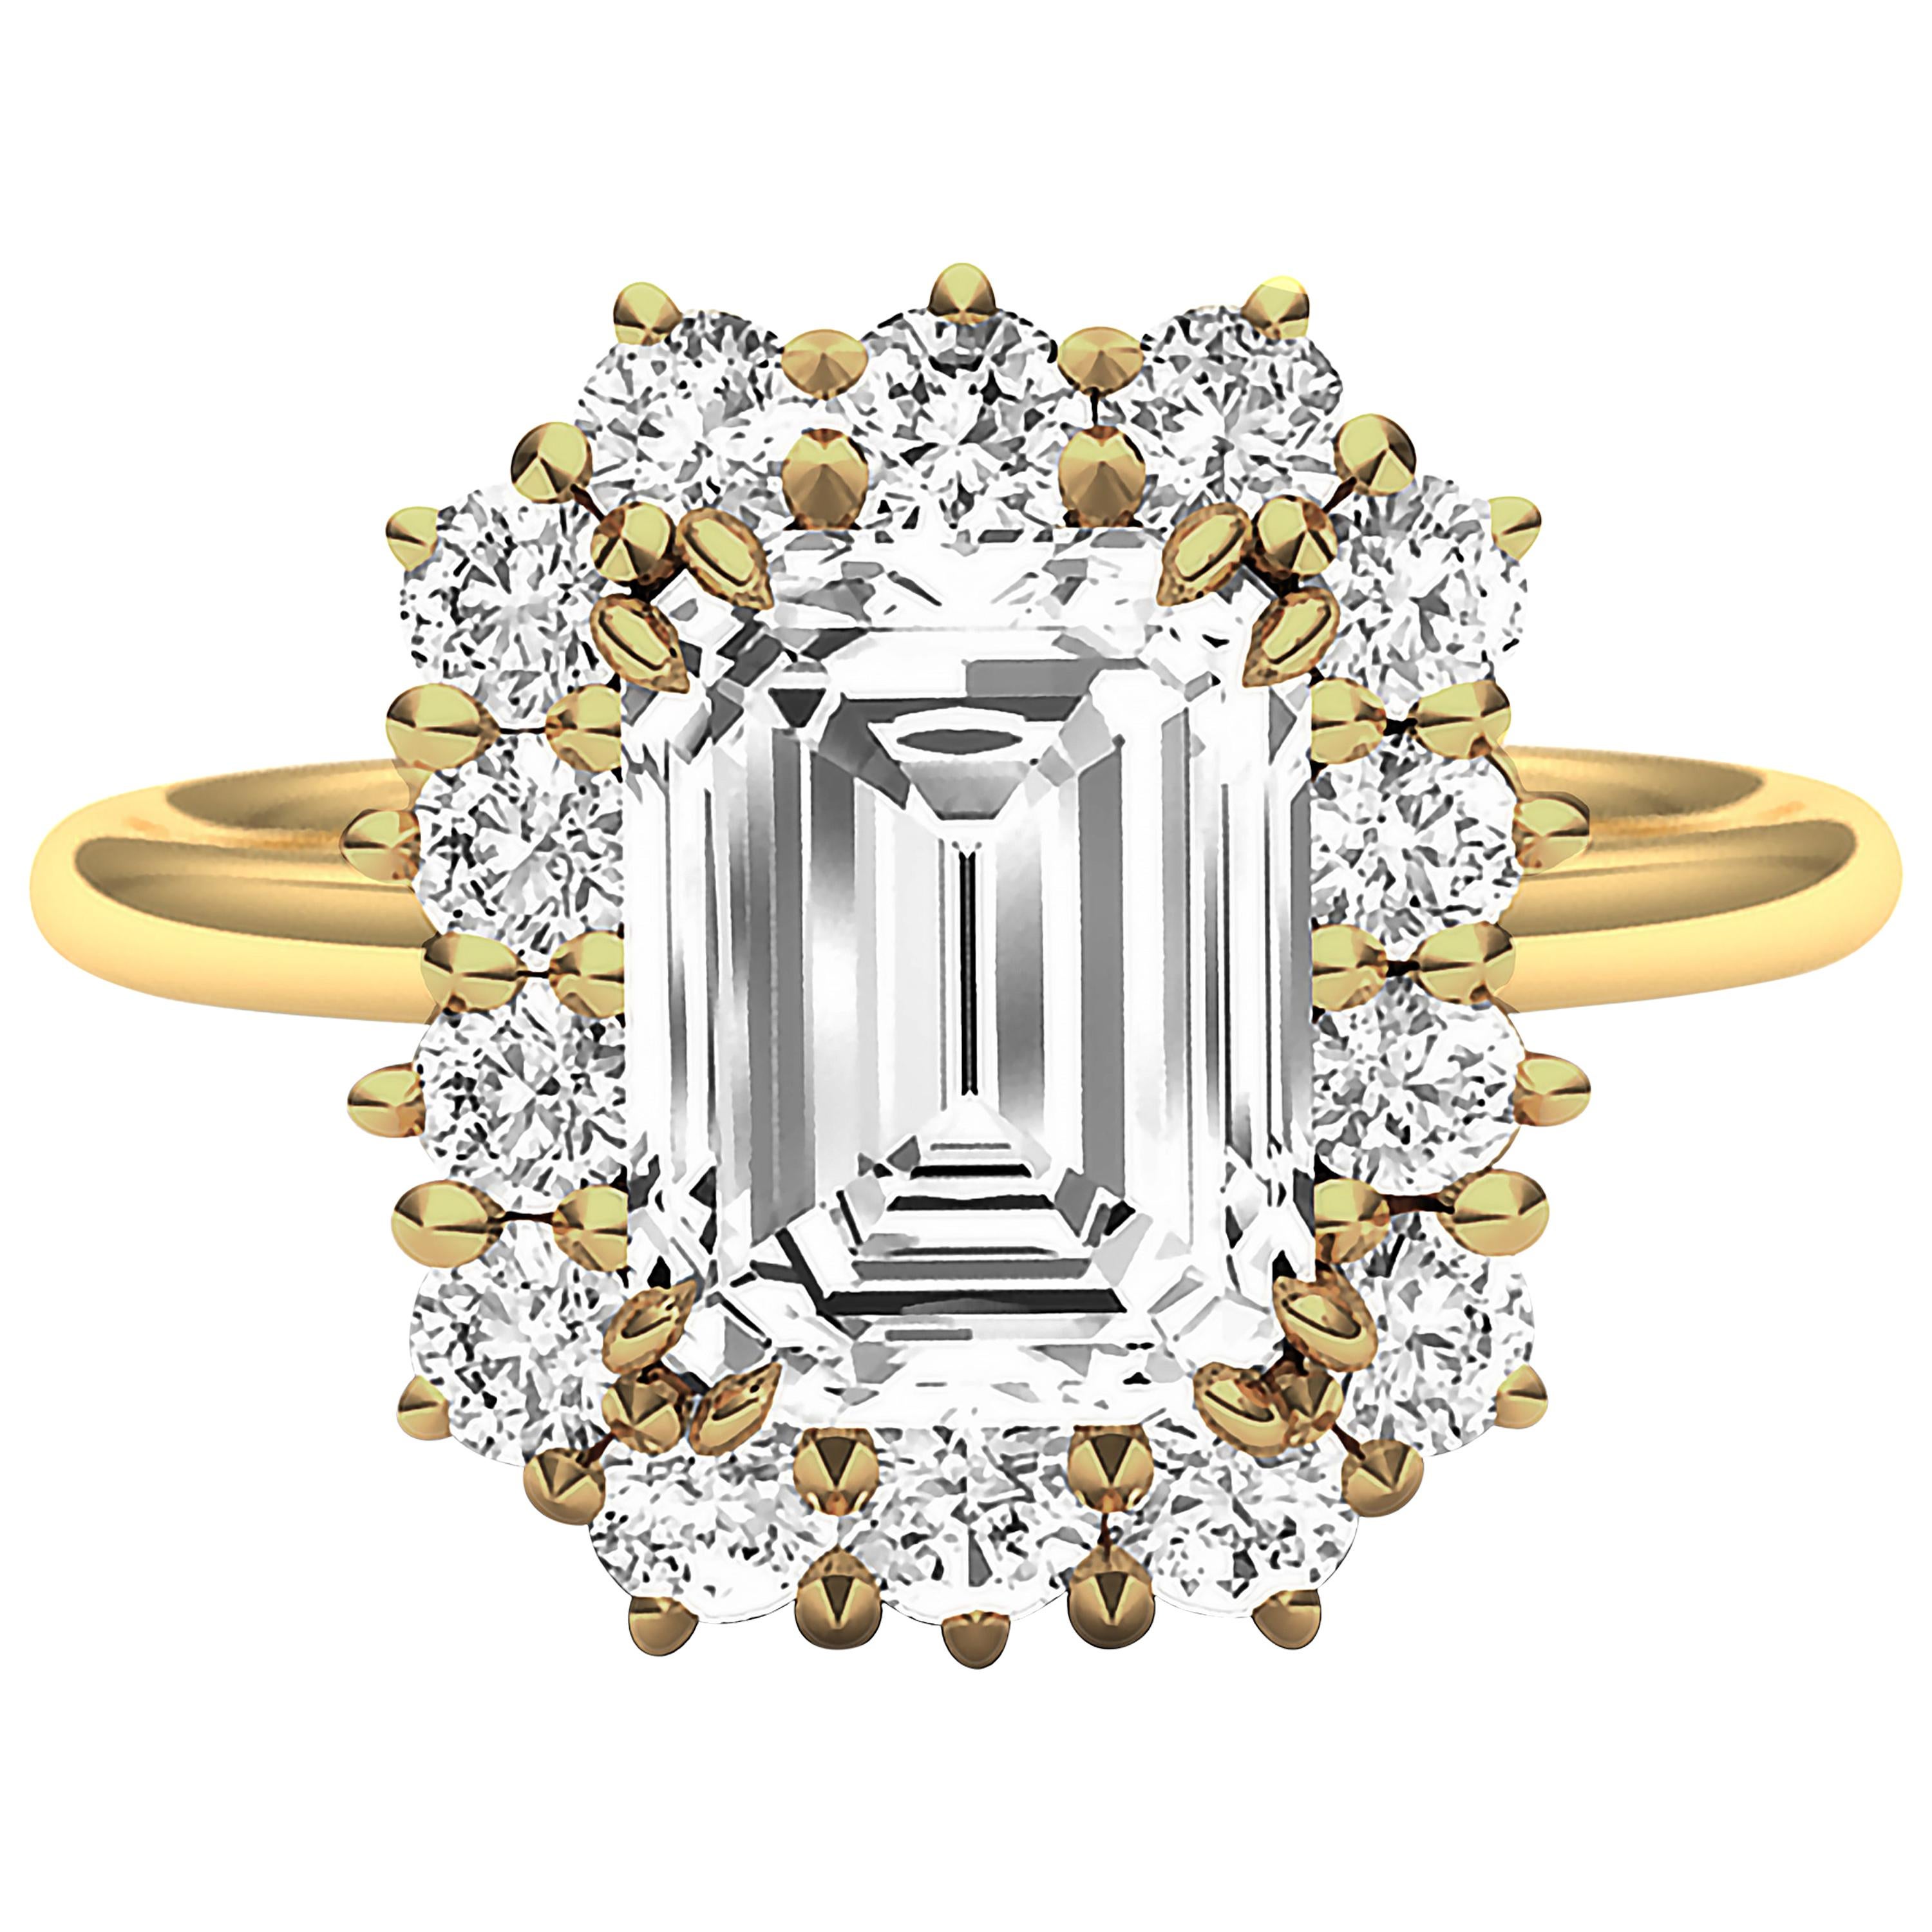 2 Carat GIA Certified K-VS2 Emerald Cut Engagement Ring